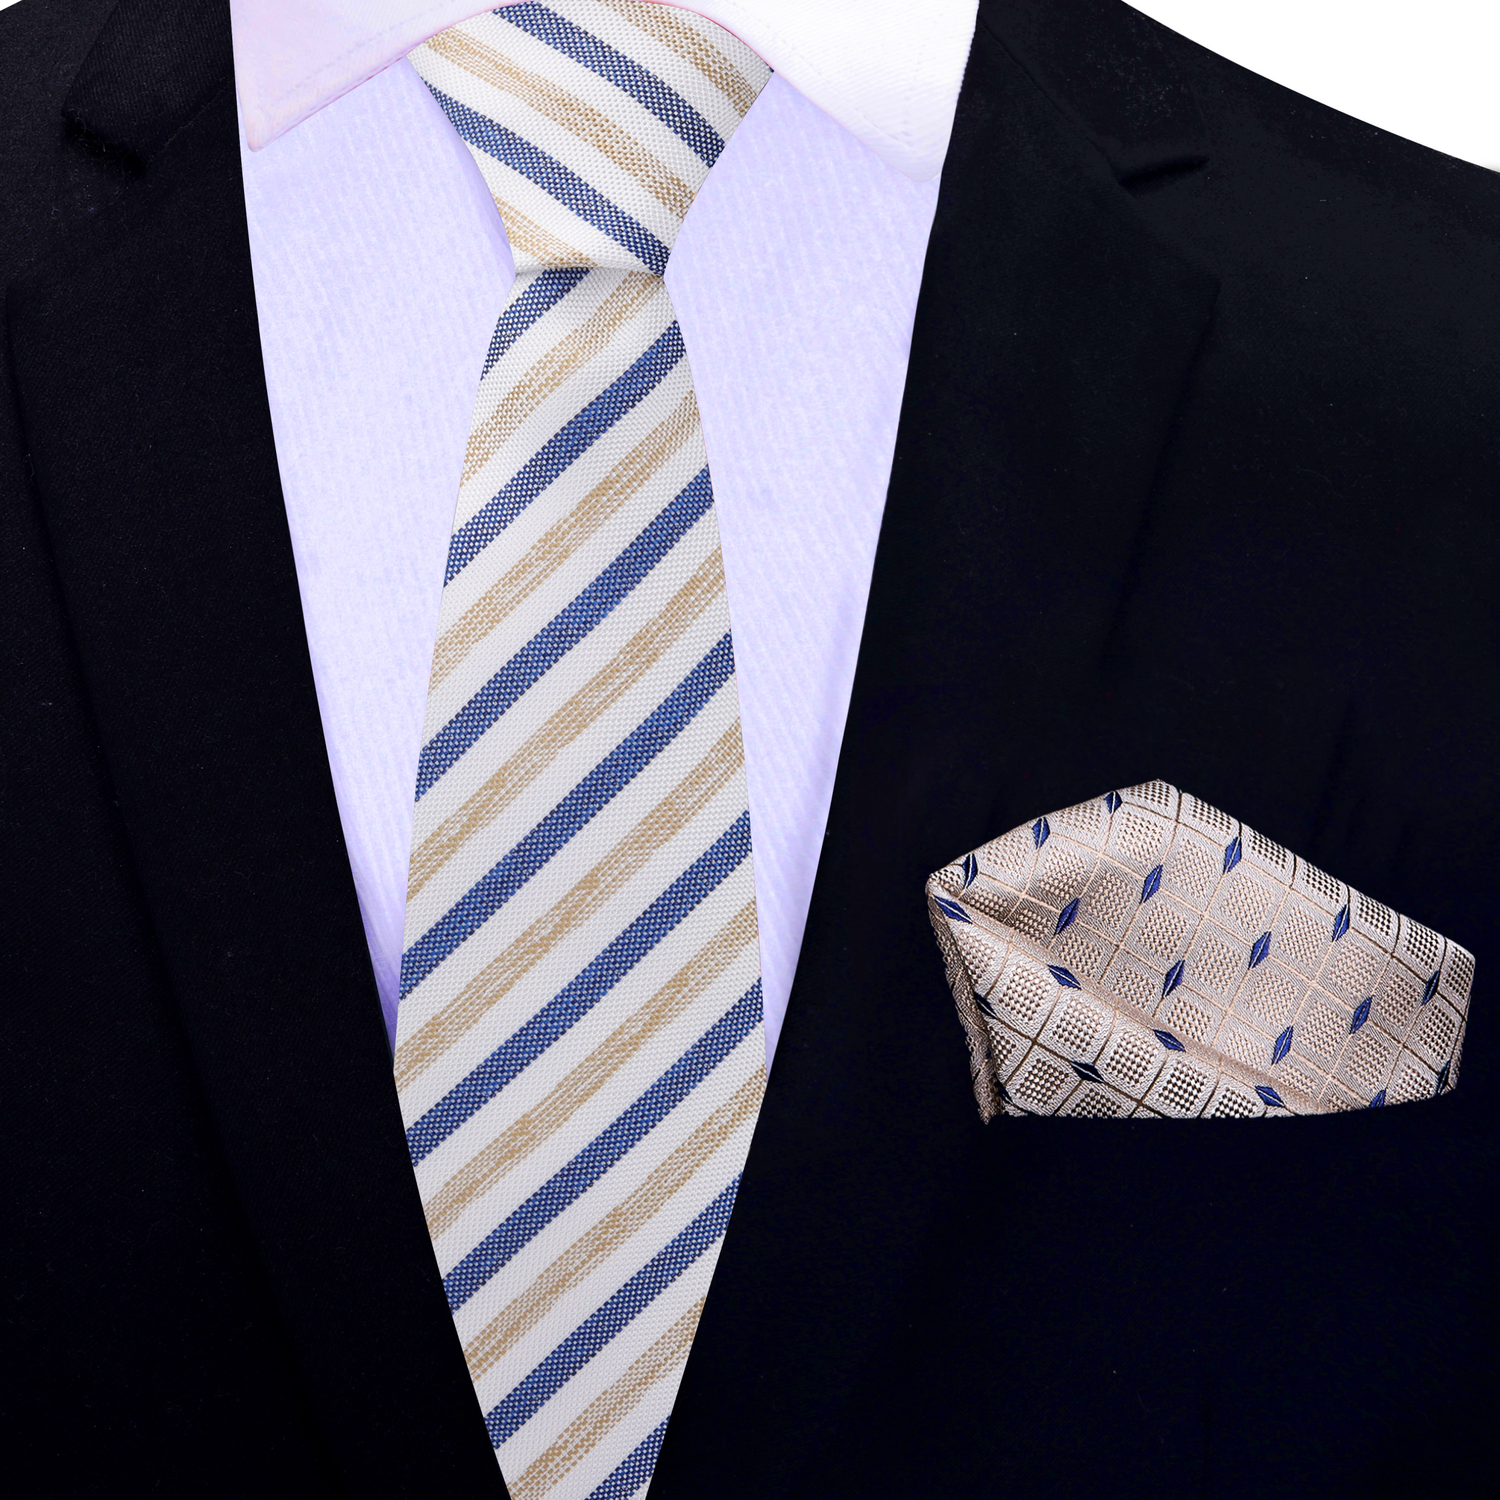 Thin Tie White, Dark Blue, Light Brown Stripe Necktie with Cream and Blue Geometric Square